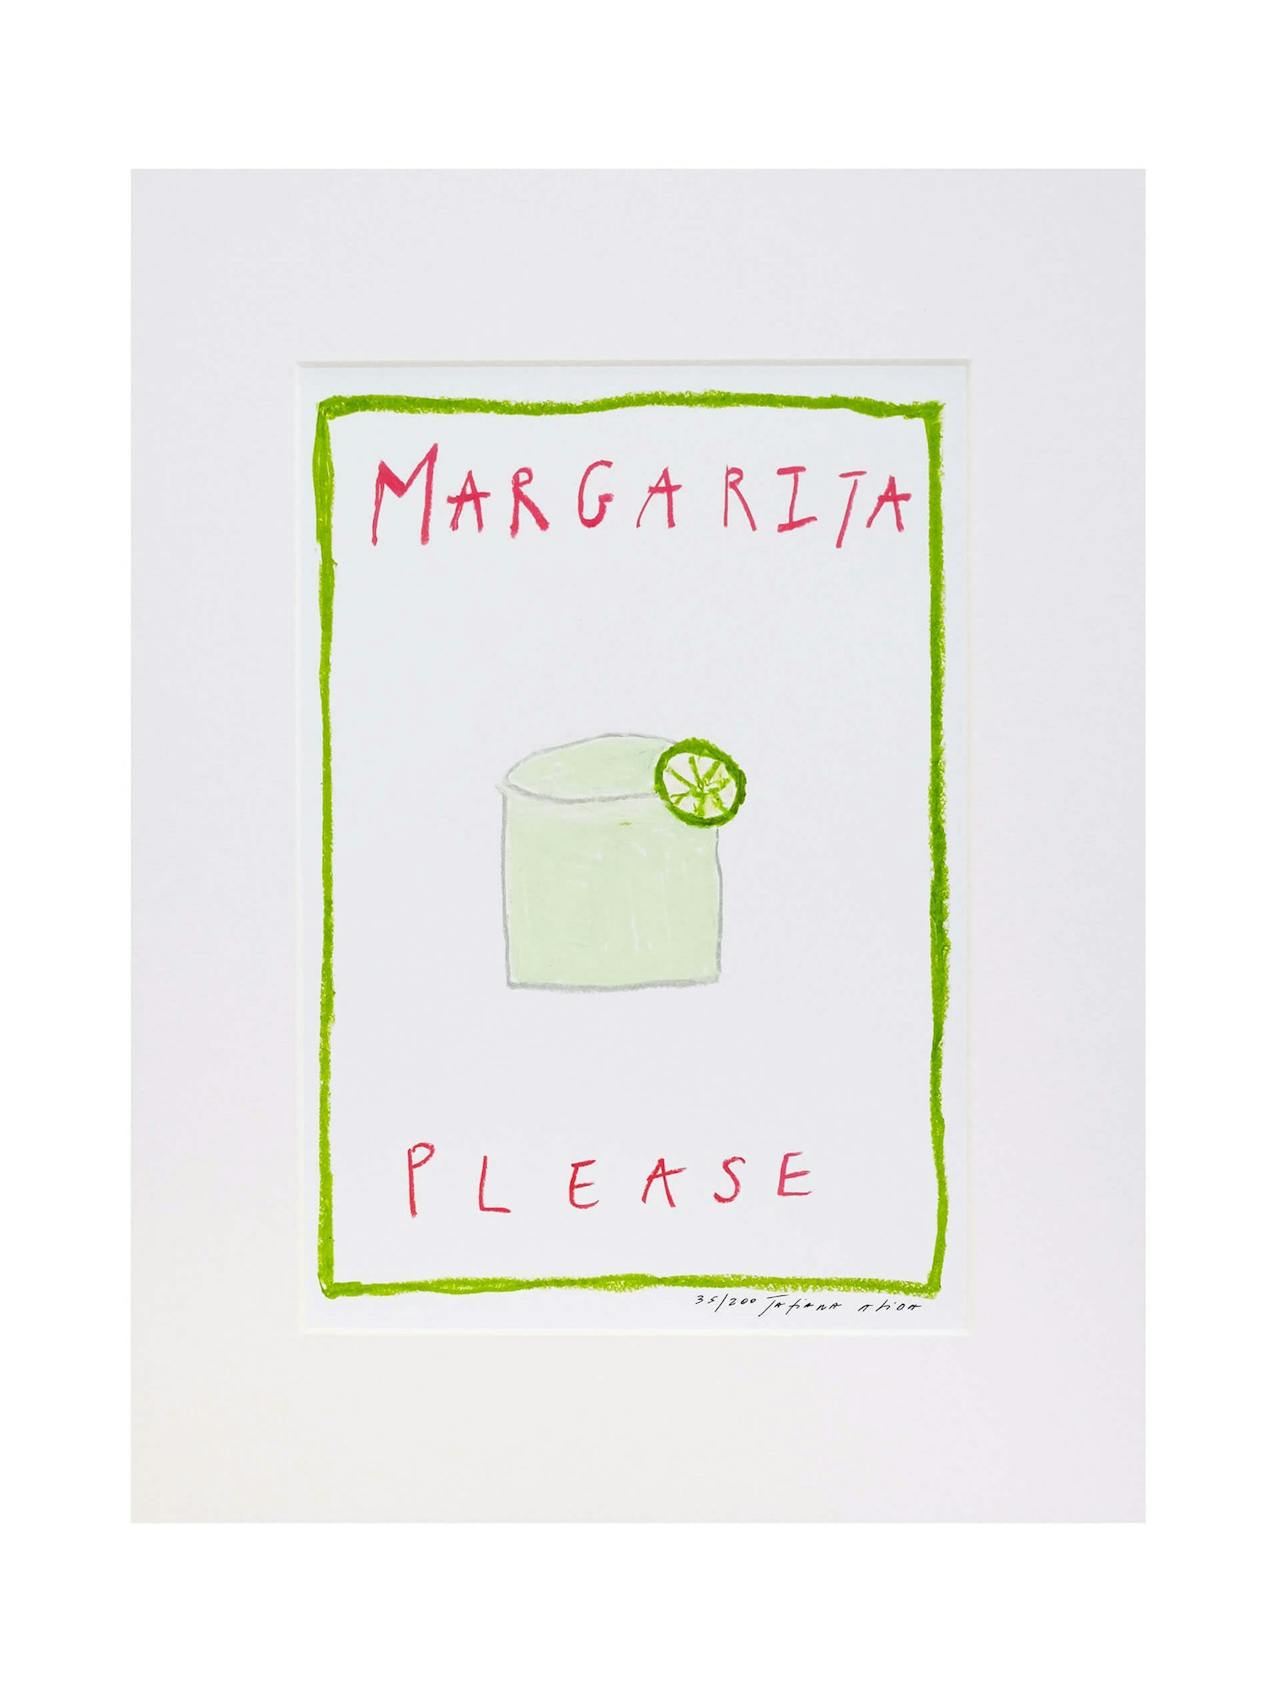 Margarita Please print